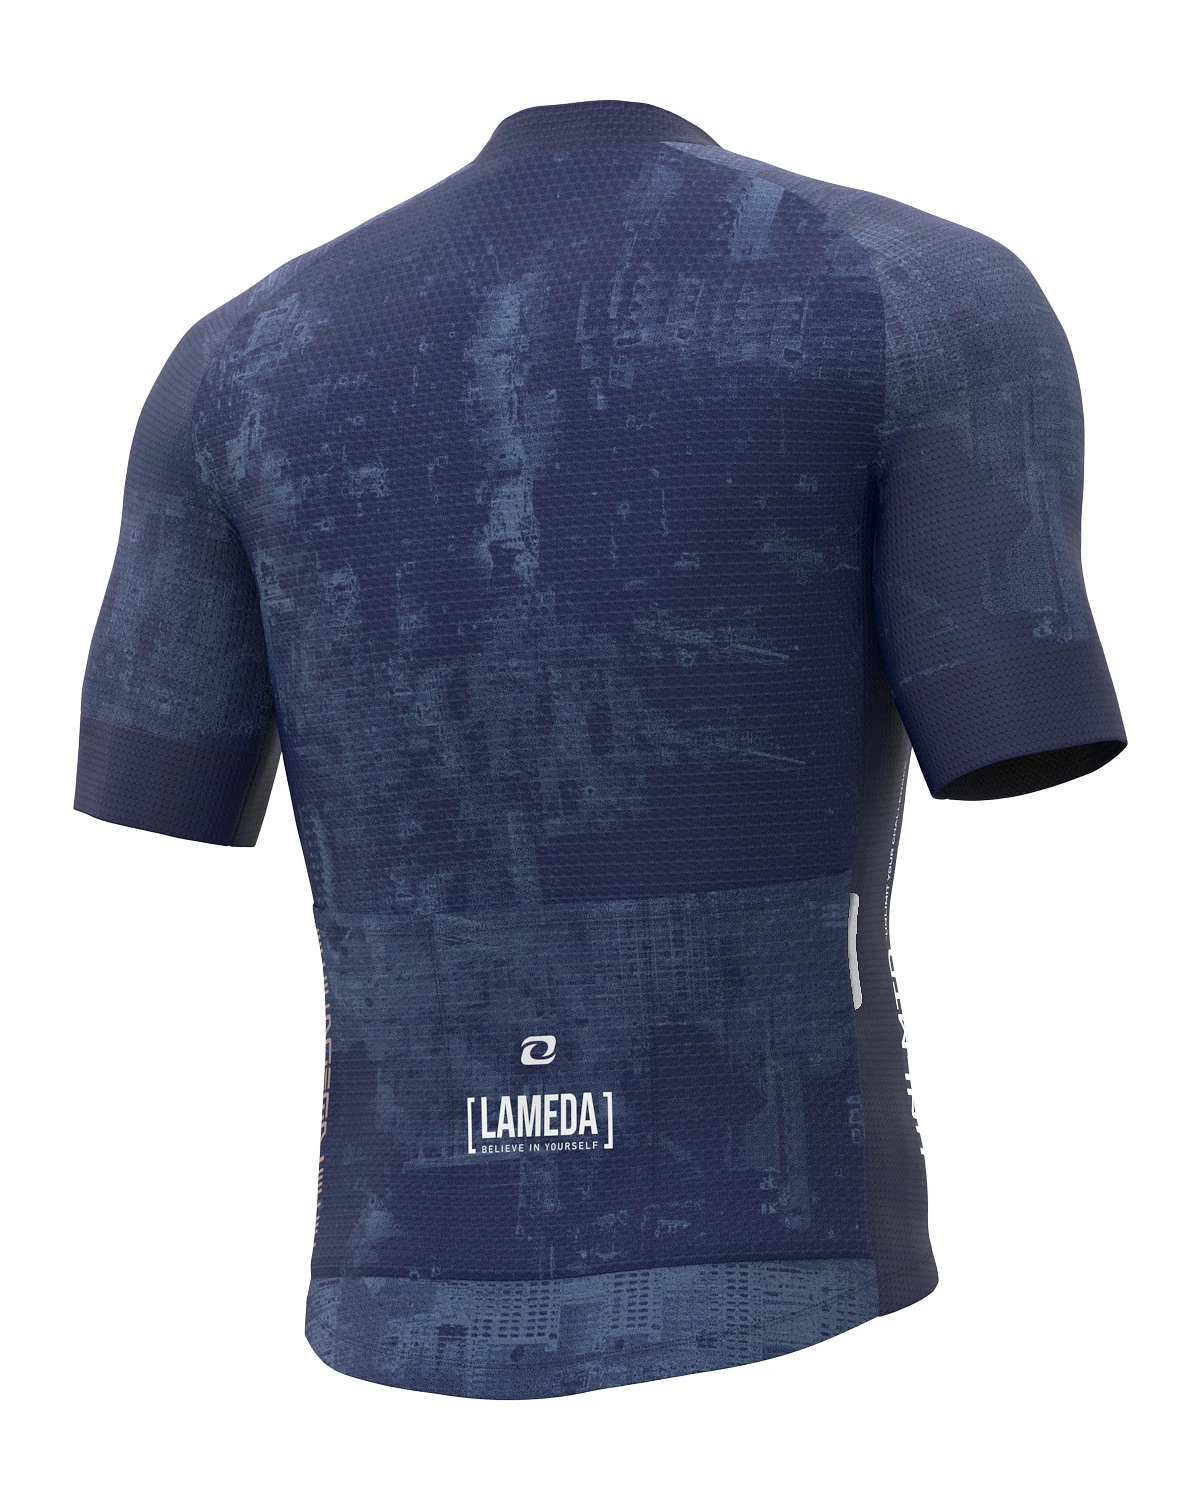 LAMEDA Manufactory Sweat Wicking Sportswear Pro Team Mens Cycling Clothing